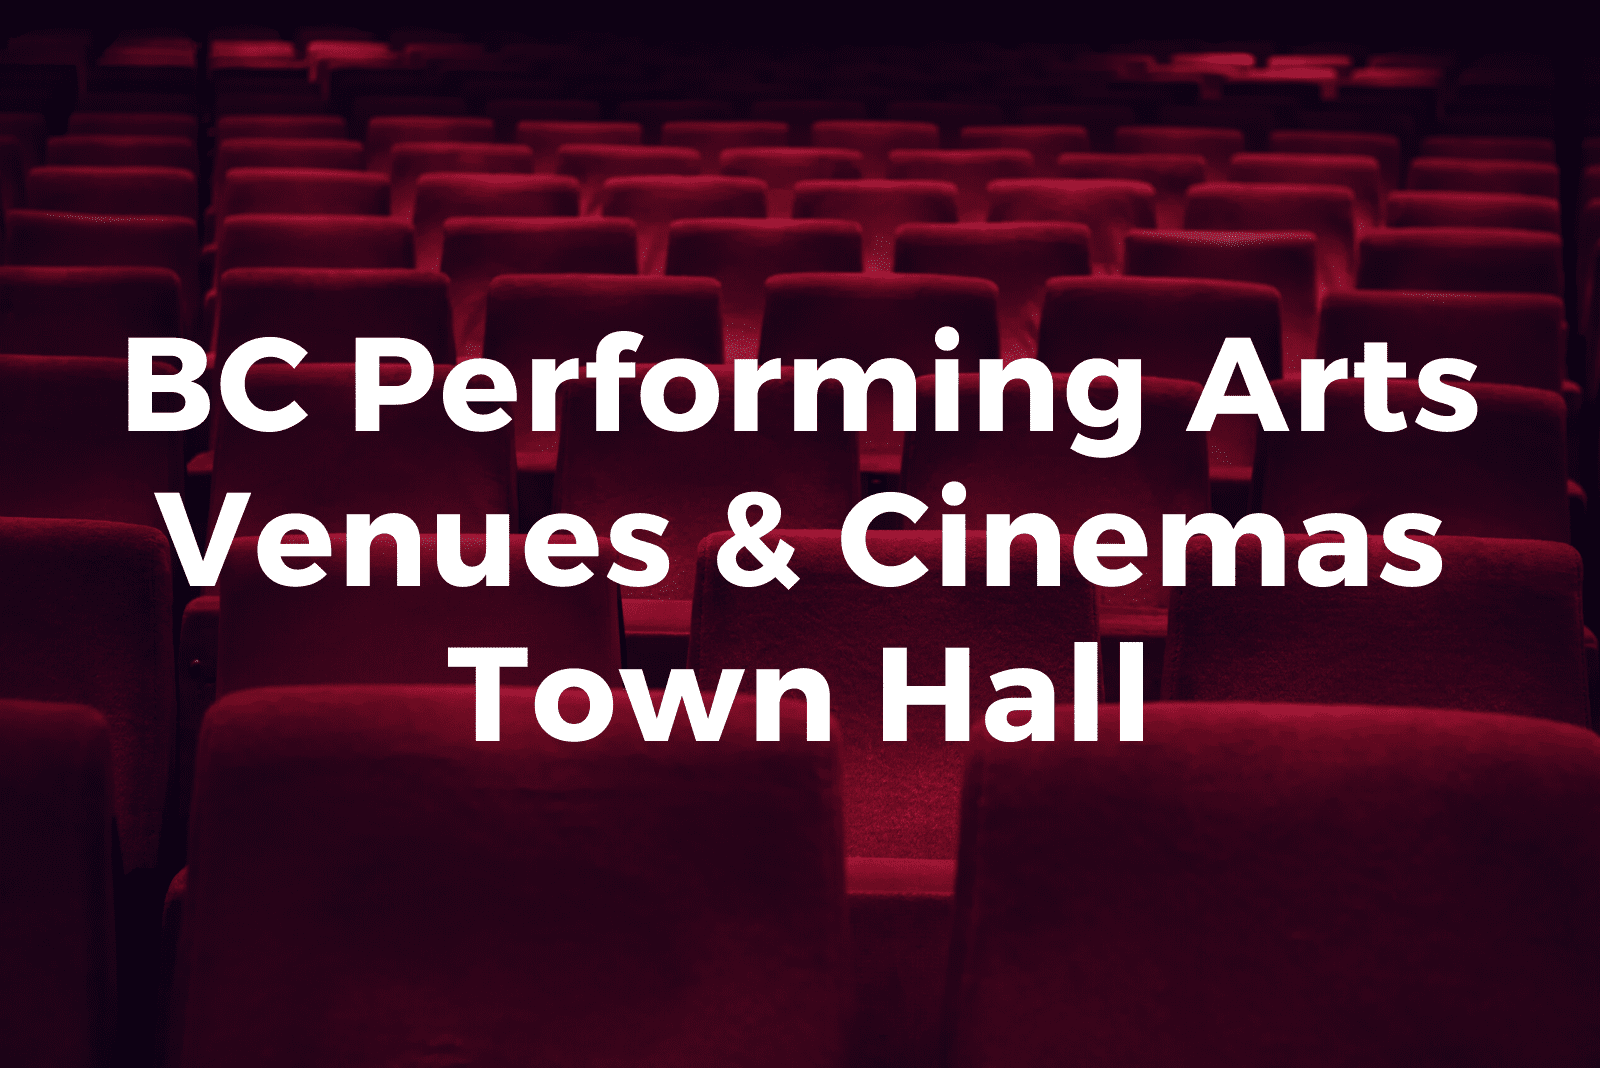 BC Performing Arts Venues & Cinemas Town Hall